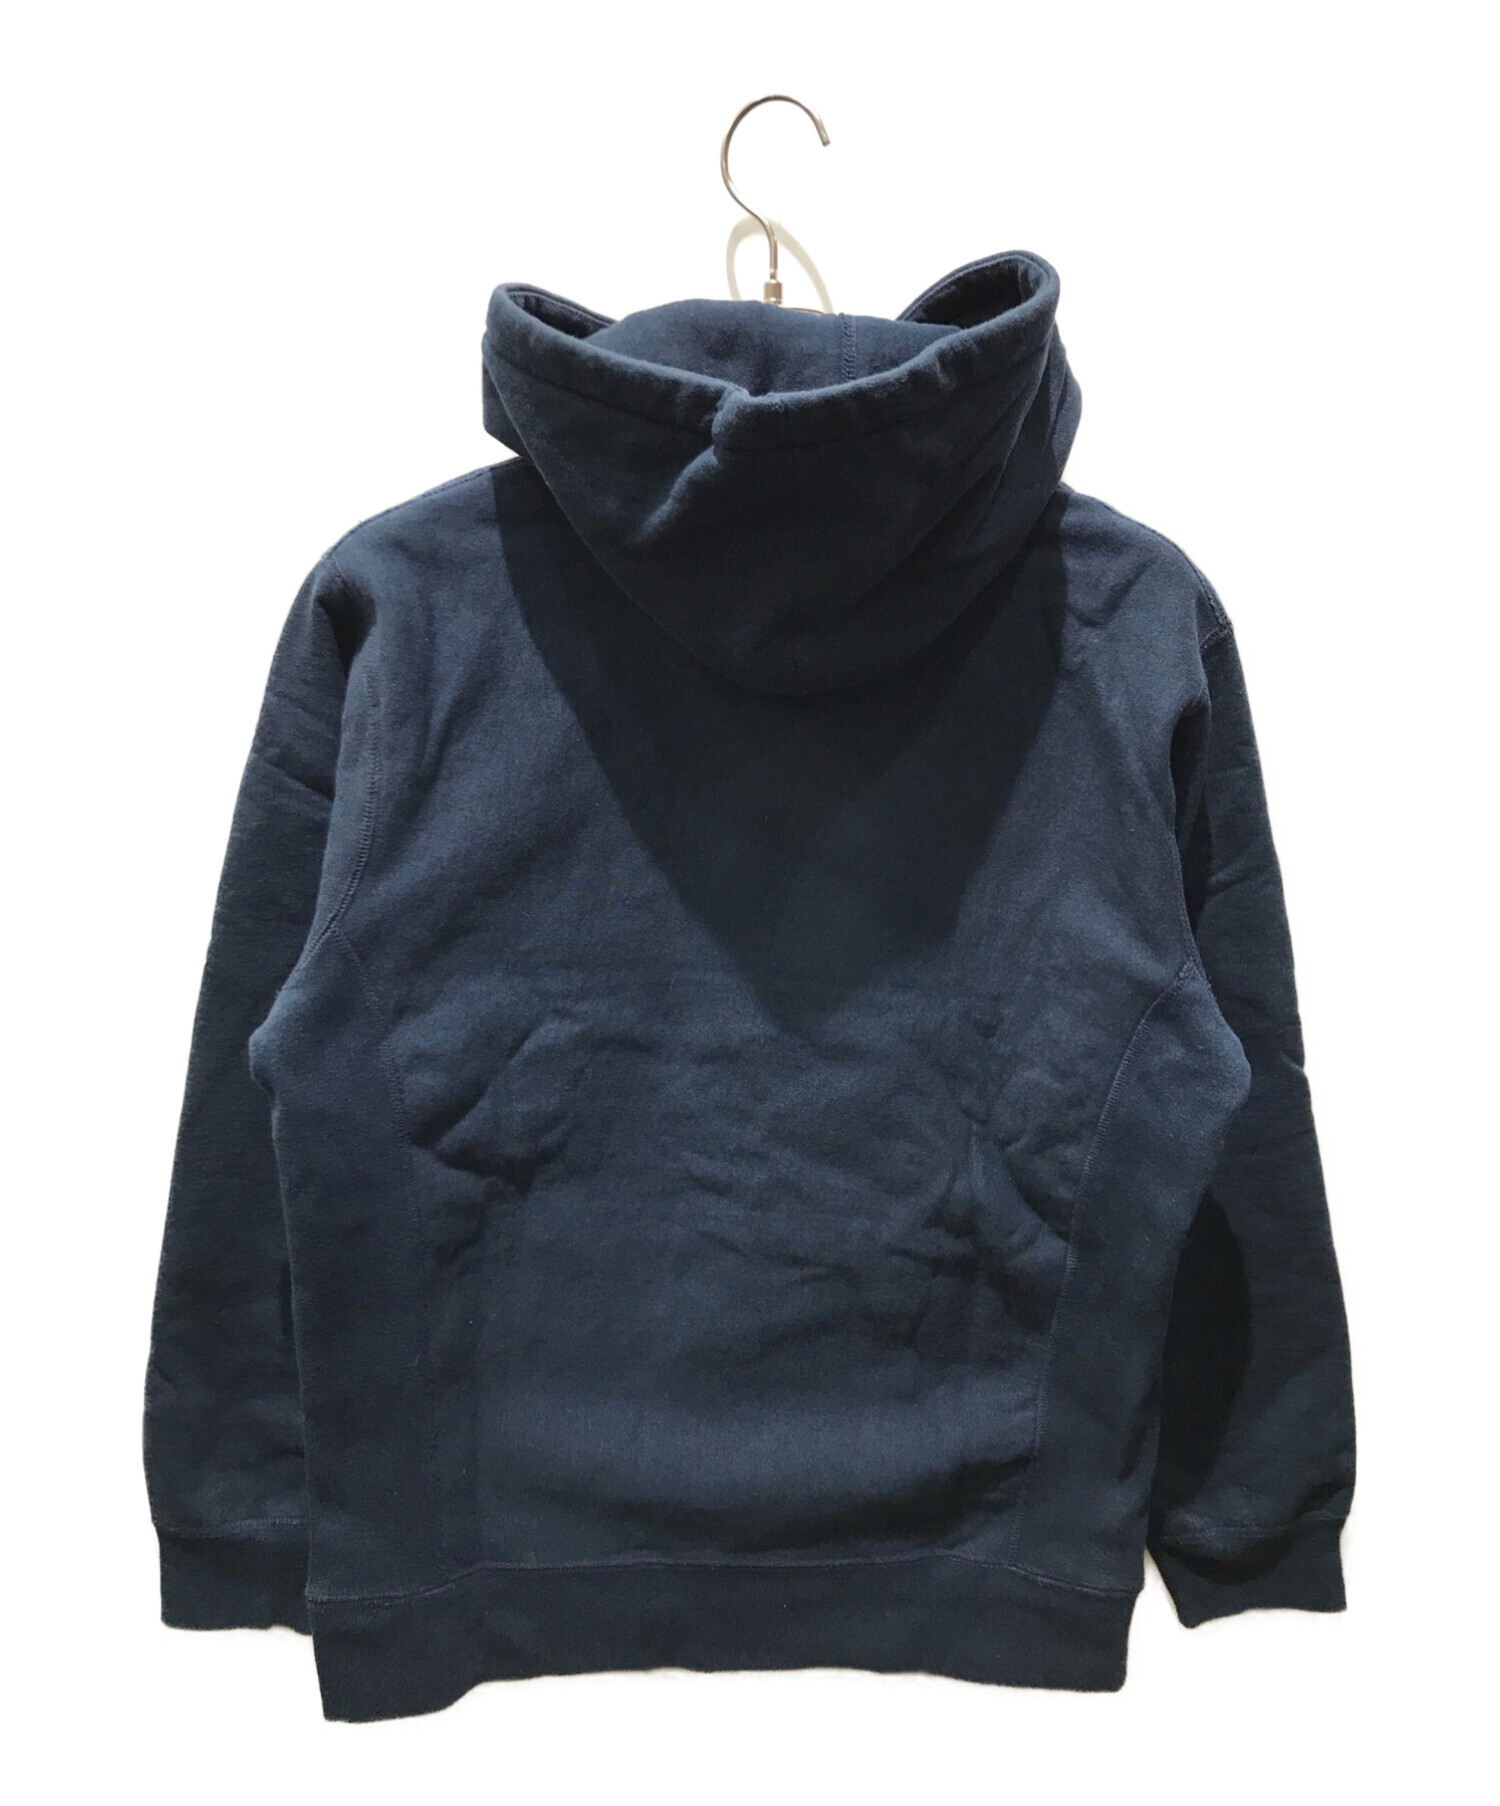 L Supreme $ Hooded Sweatshirt Navy 新品さらにLサイズは希少で